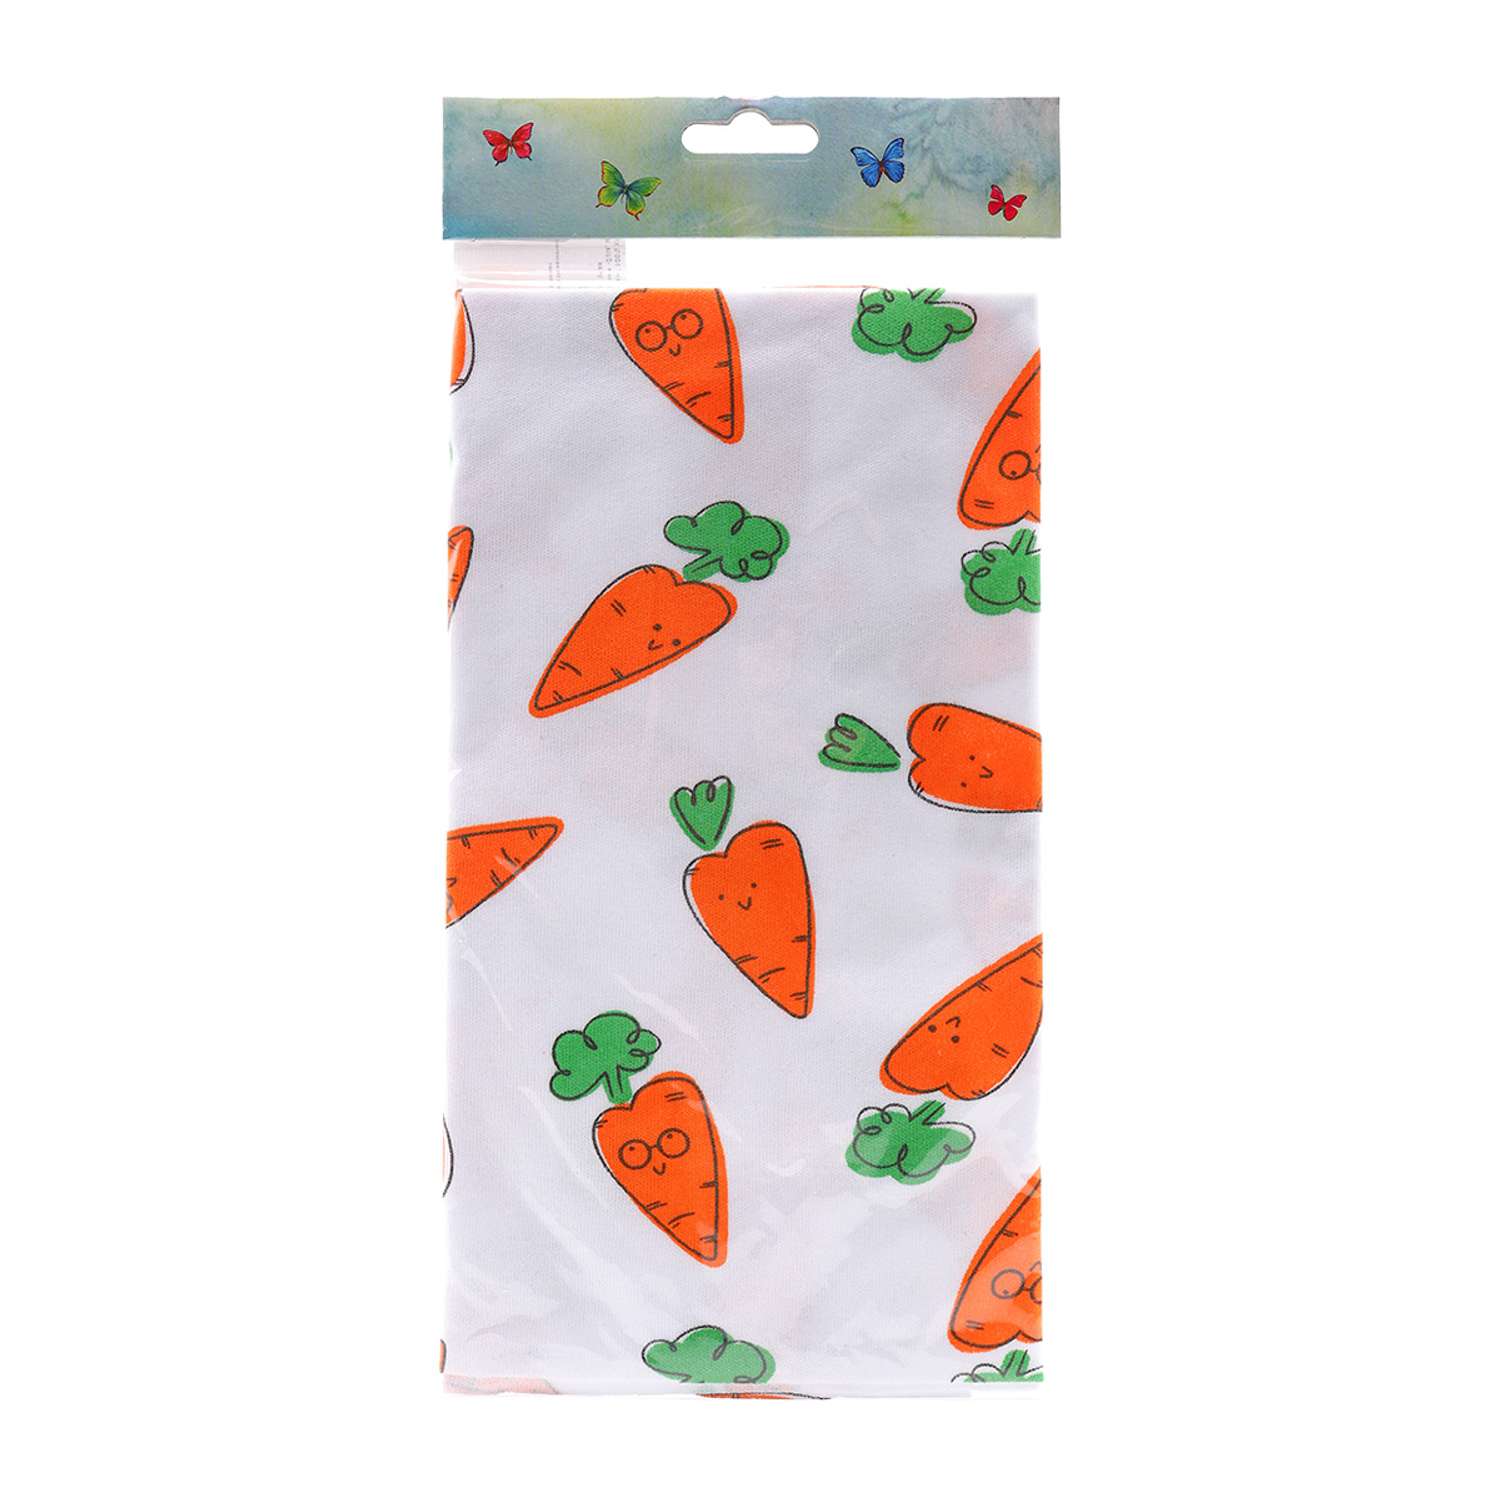 Ткань Совушка трикотаж интерлок с рисунком морковь хлопок для творчества 45х50 см бело-оранжевый - фото 4